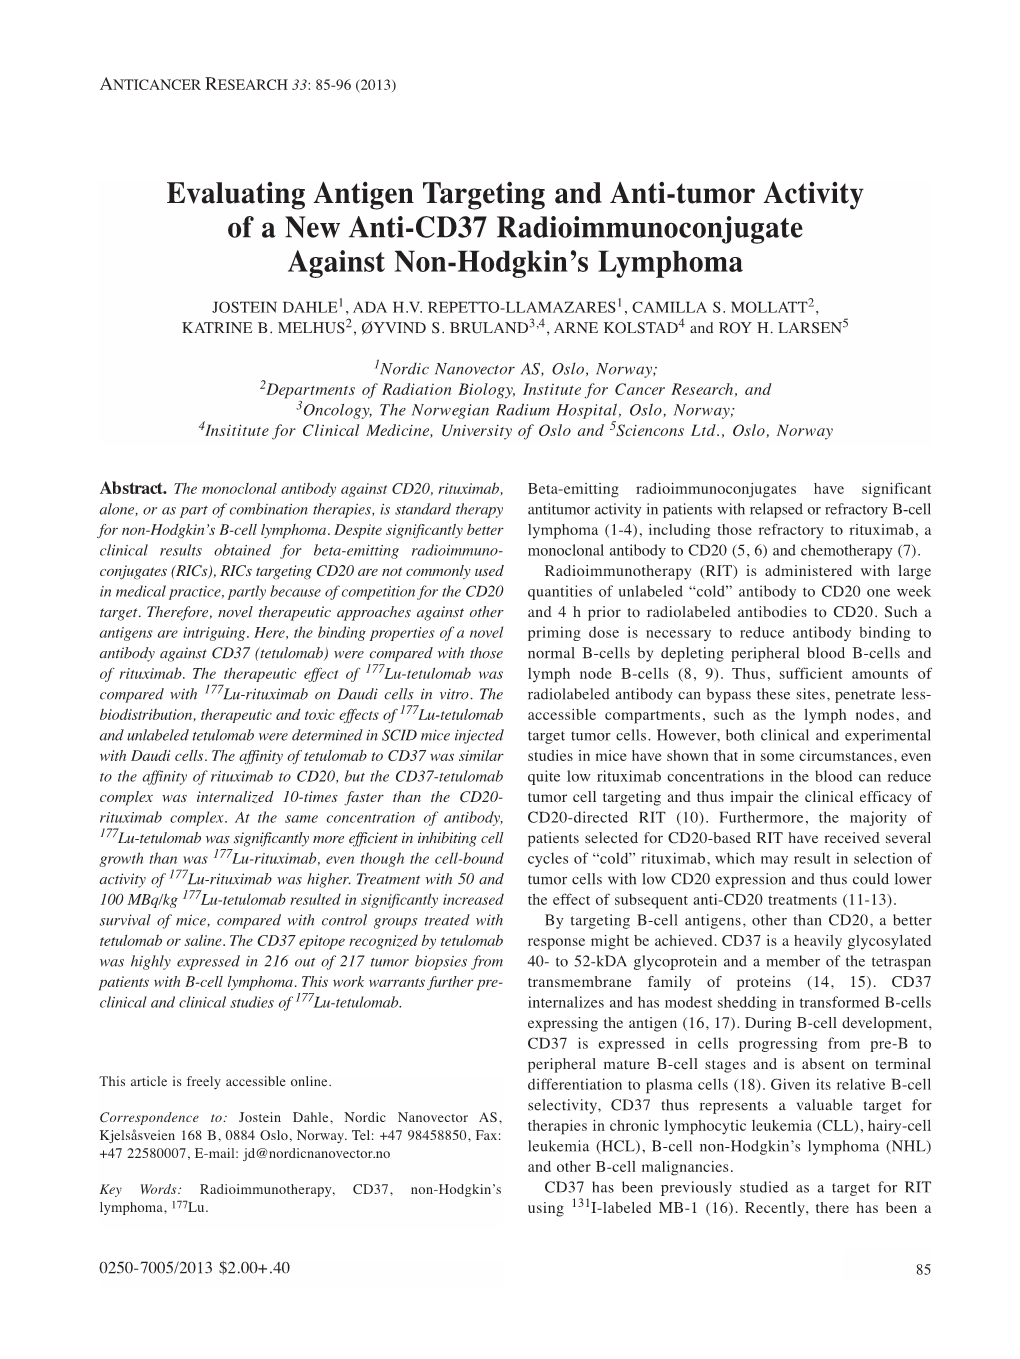 Evaluating Antigen Targeting and Anti-Tumor Activity of a New Anti-CD37 Radioimmunoconjugate Against Non-Hodgkin’S Lymphoma